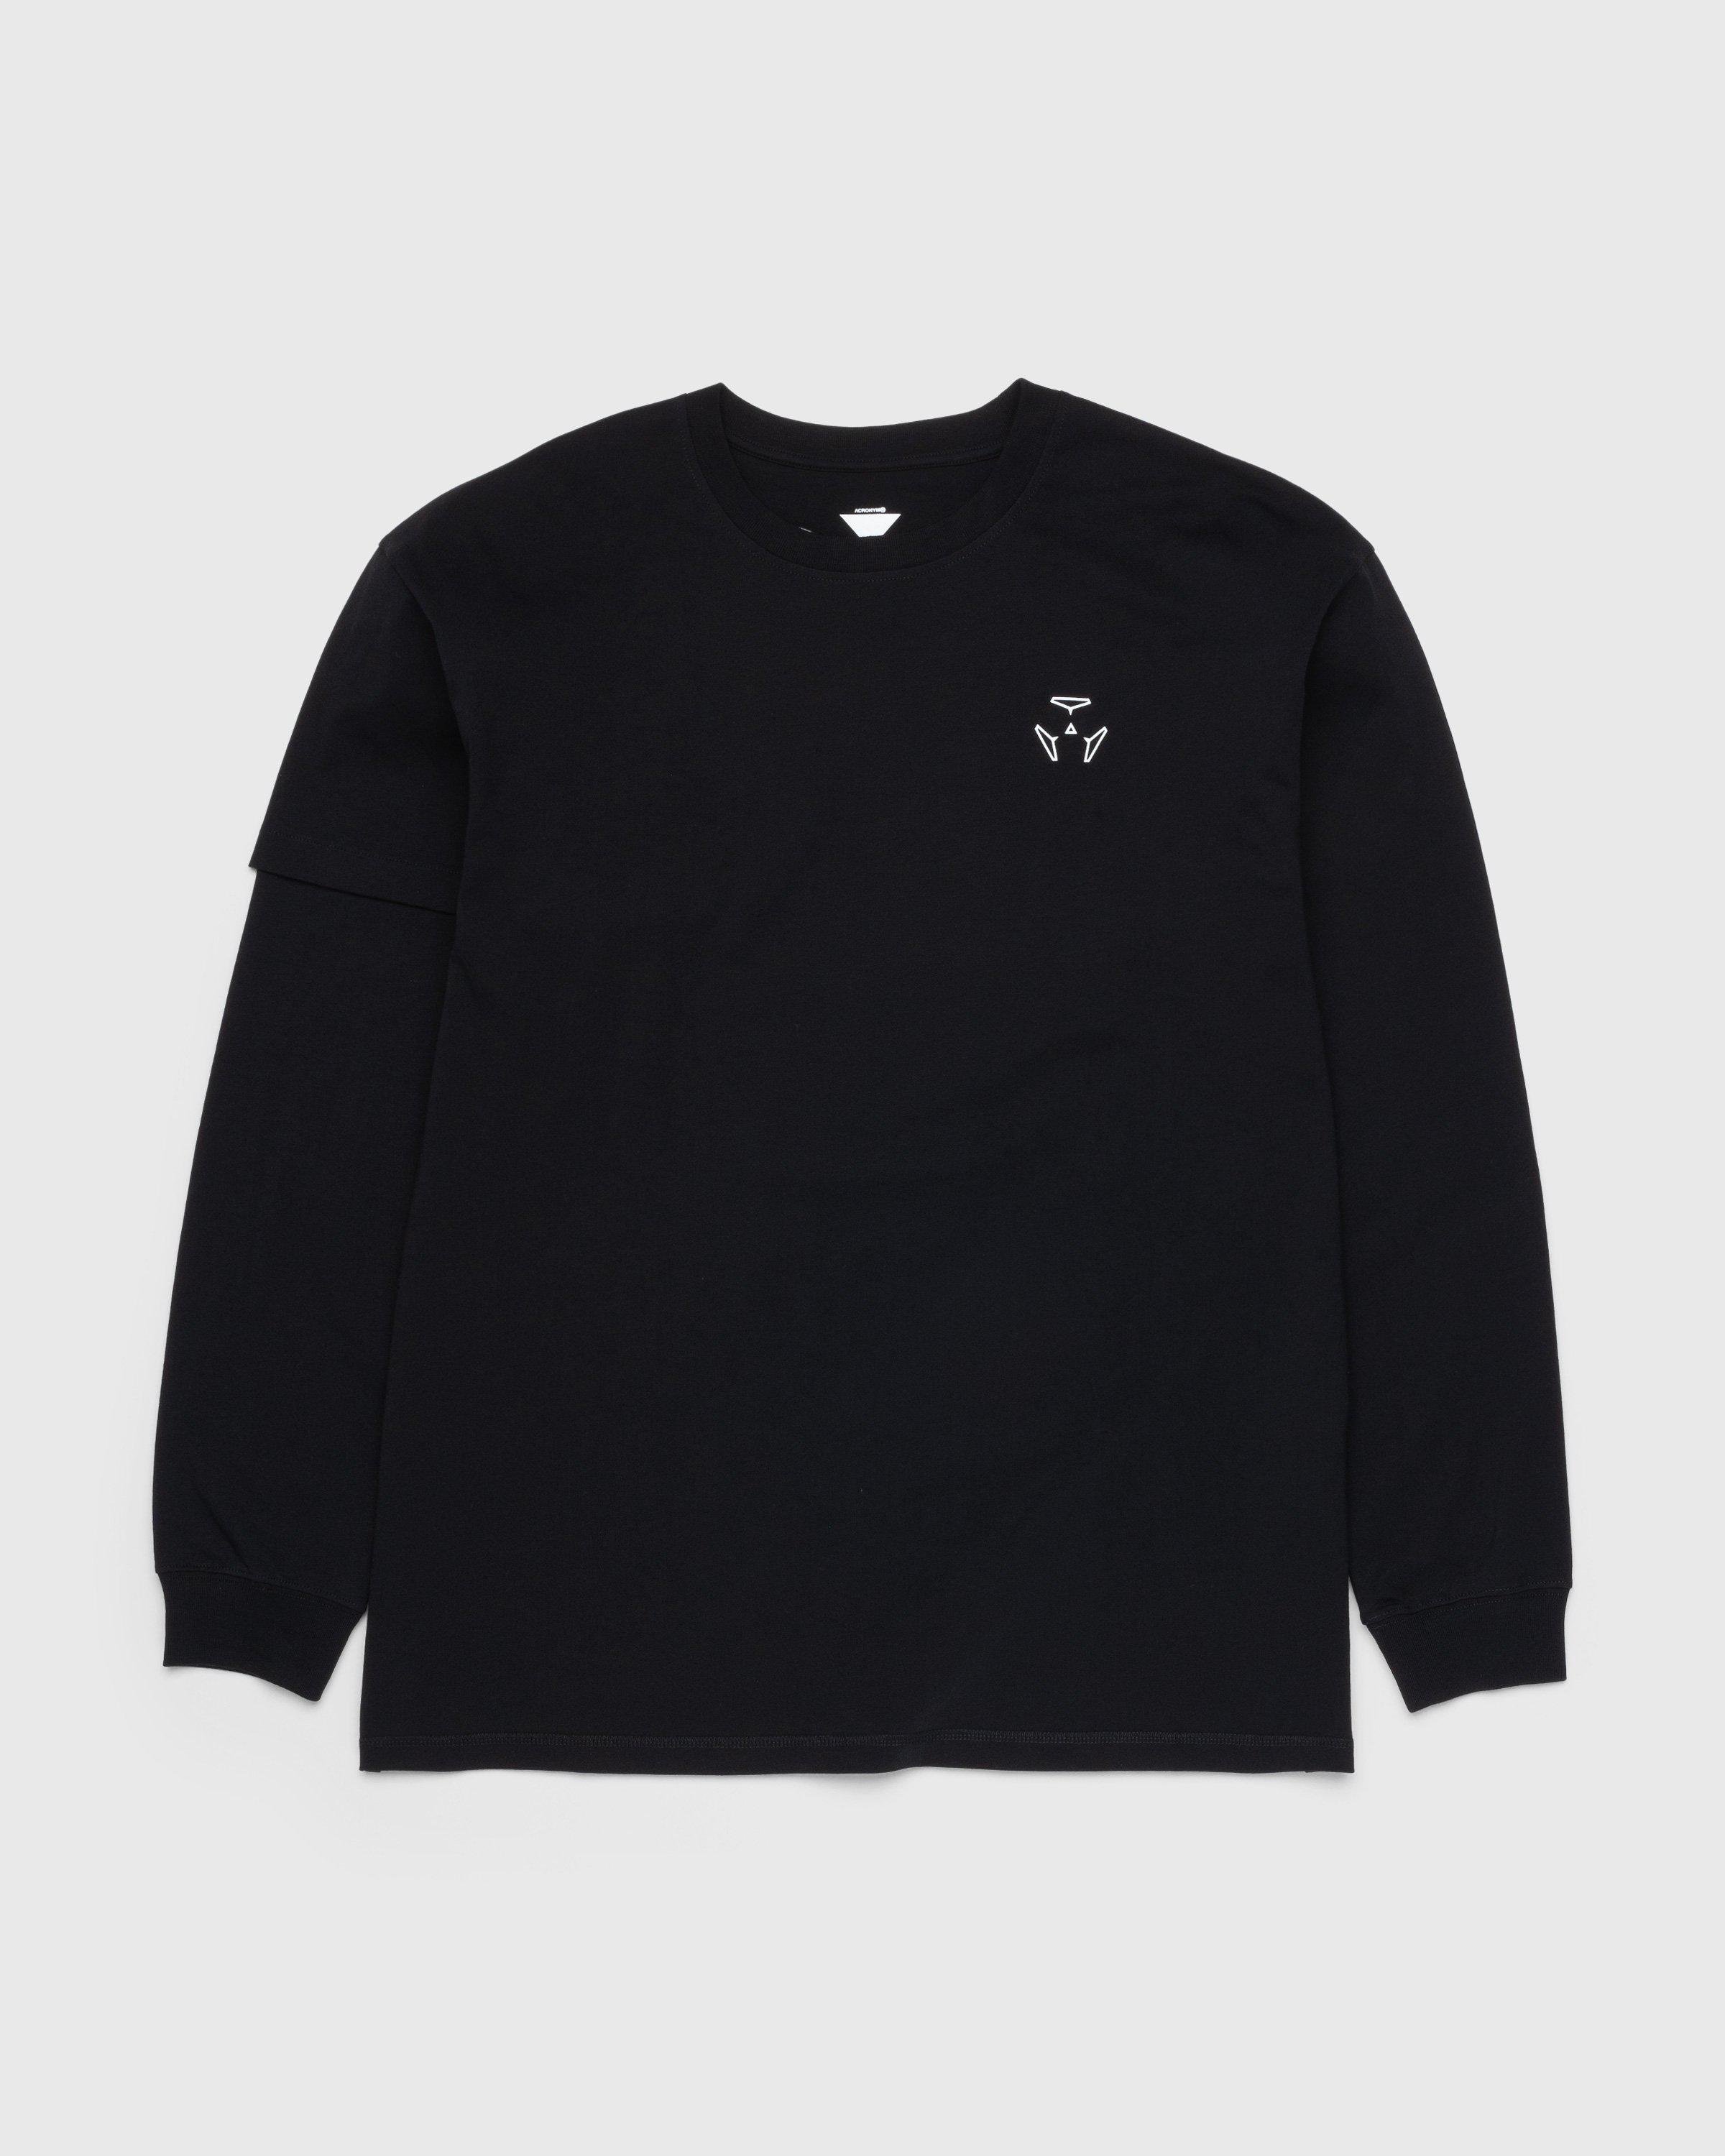 S29-PR-A Organic Cotton Longsleeve T-Shirt Black by ACRONYM